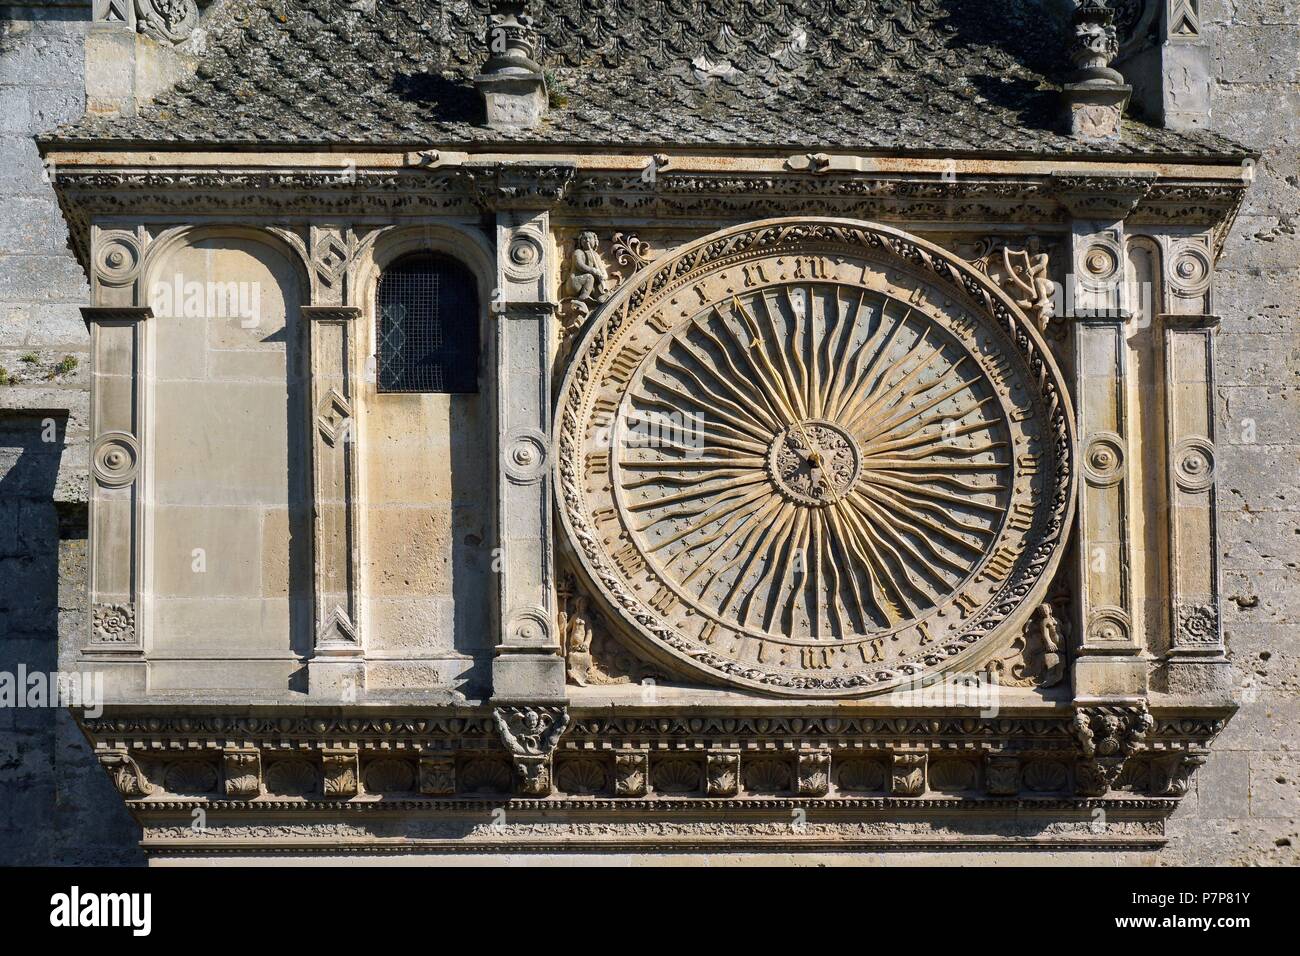 RELOJ EXTERIOR DE LA CATEDRAL DE NOTRE-DAME (Nuestra Señora de Chartres) Chartres, Francia. Foto Stock